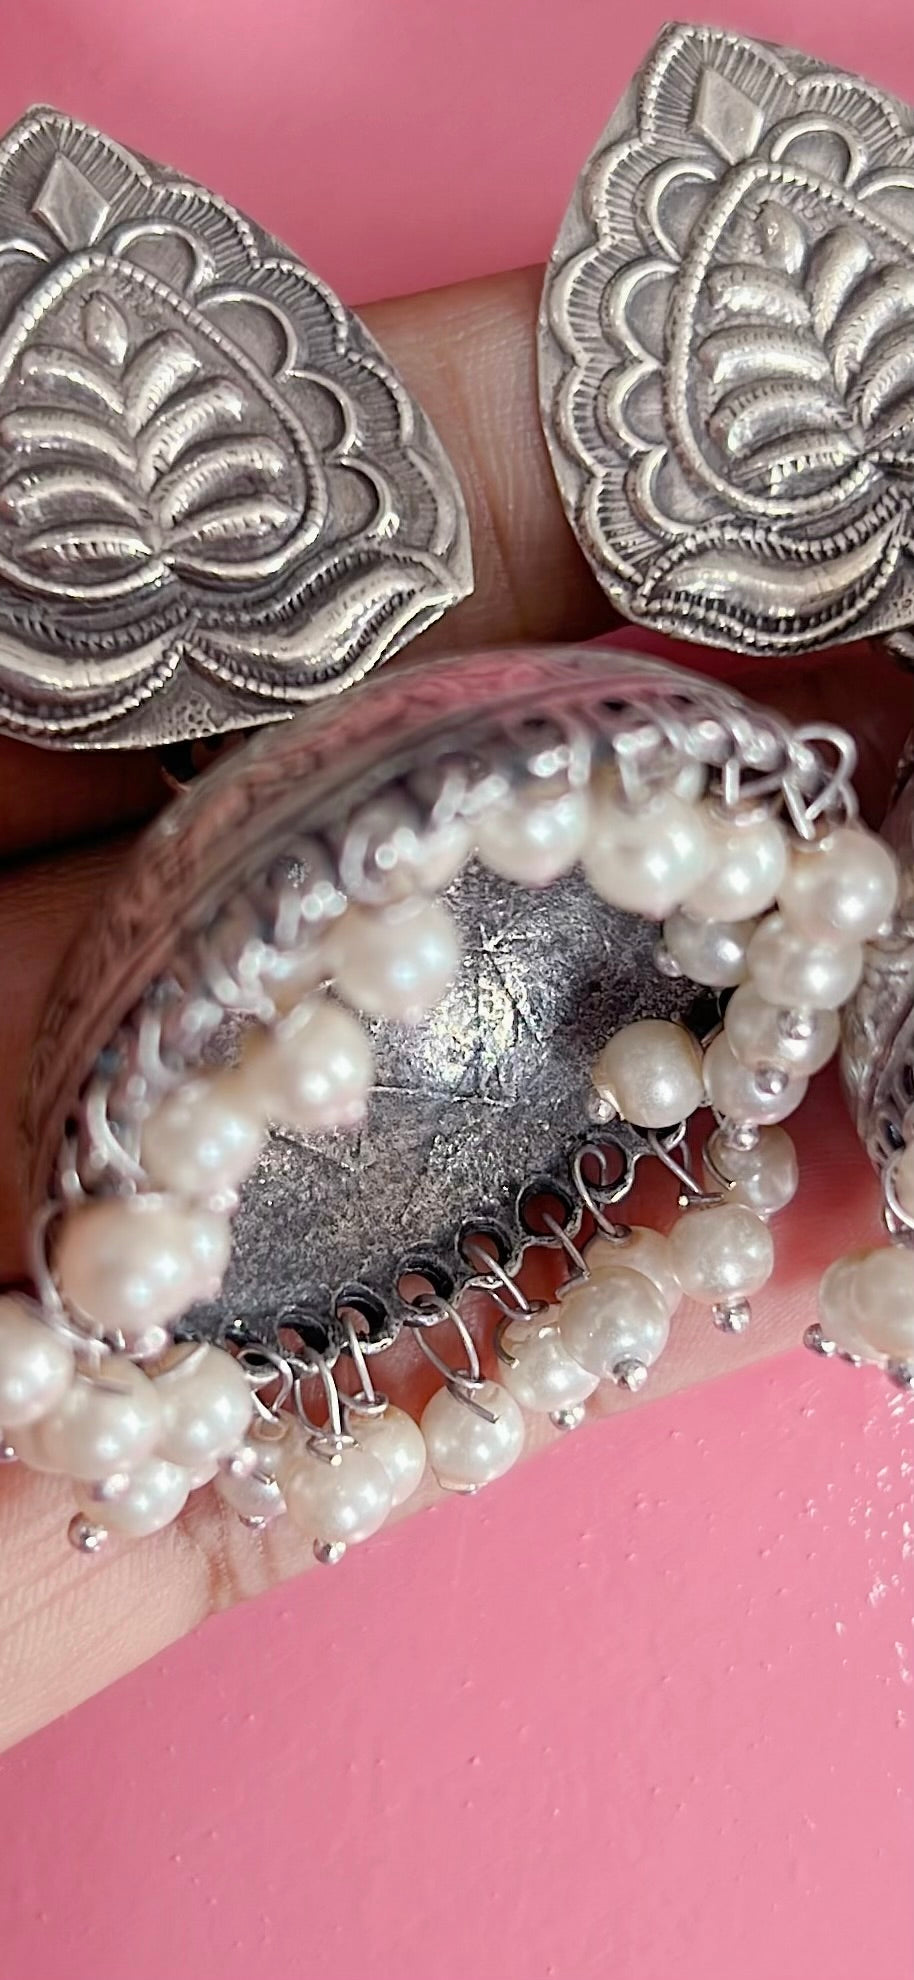 Oxidized silver jumka with pearls